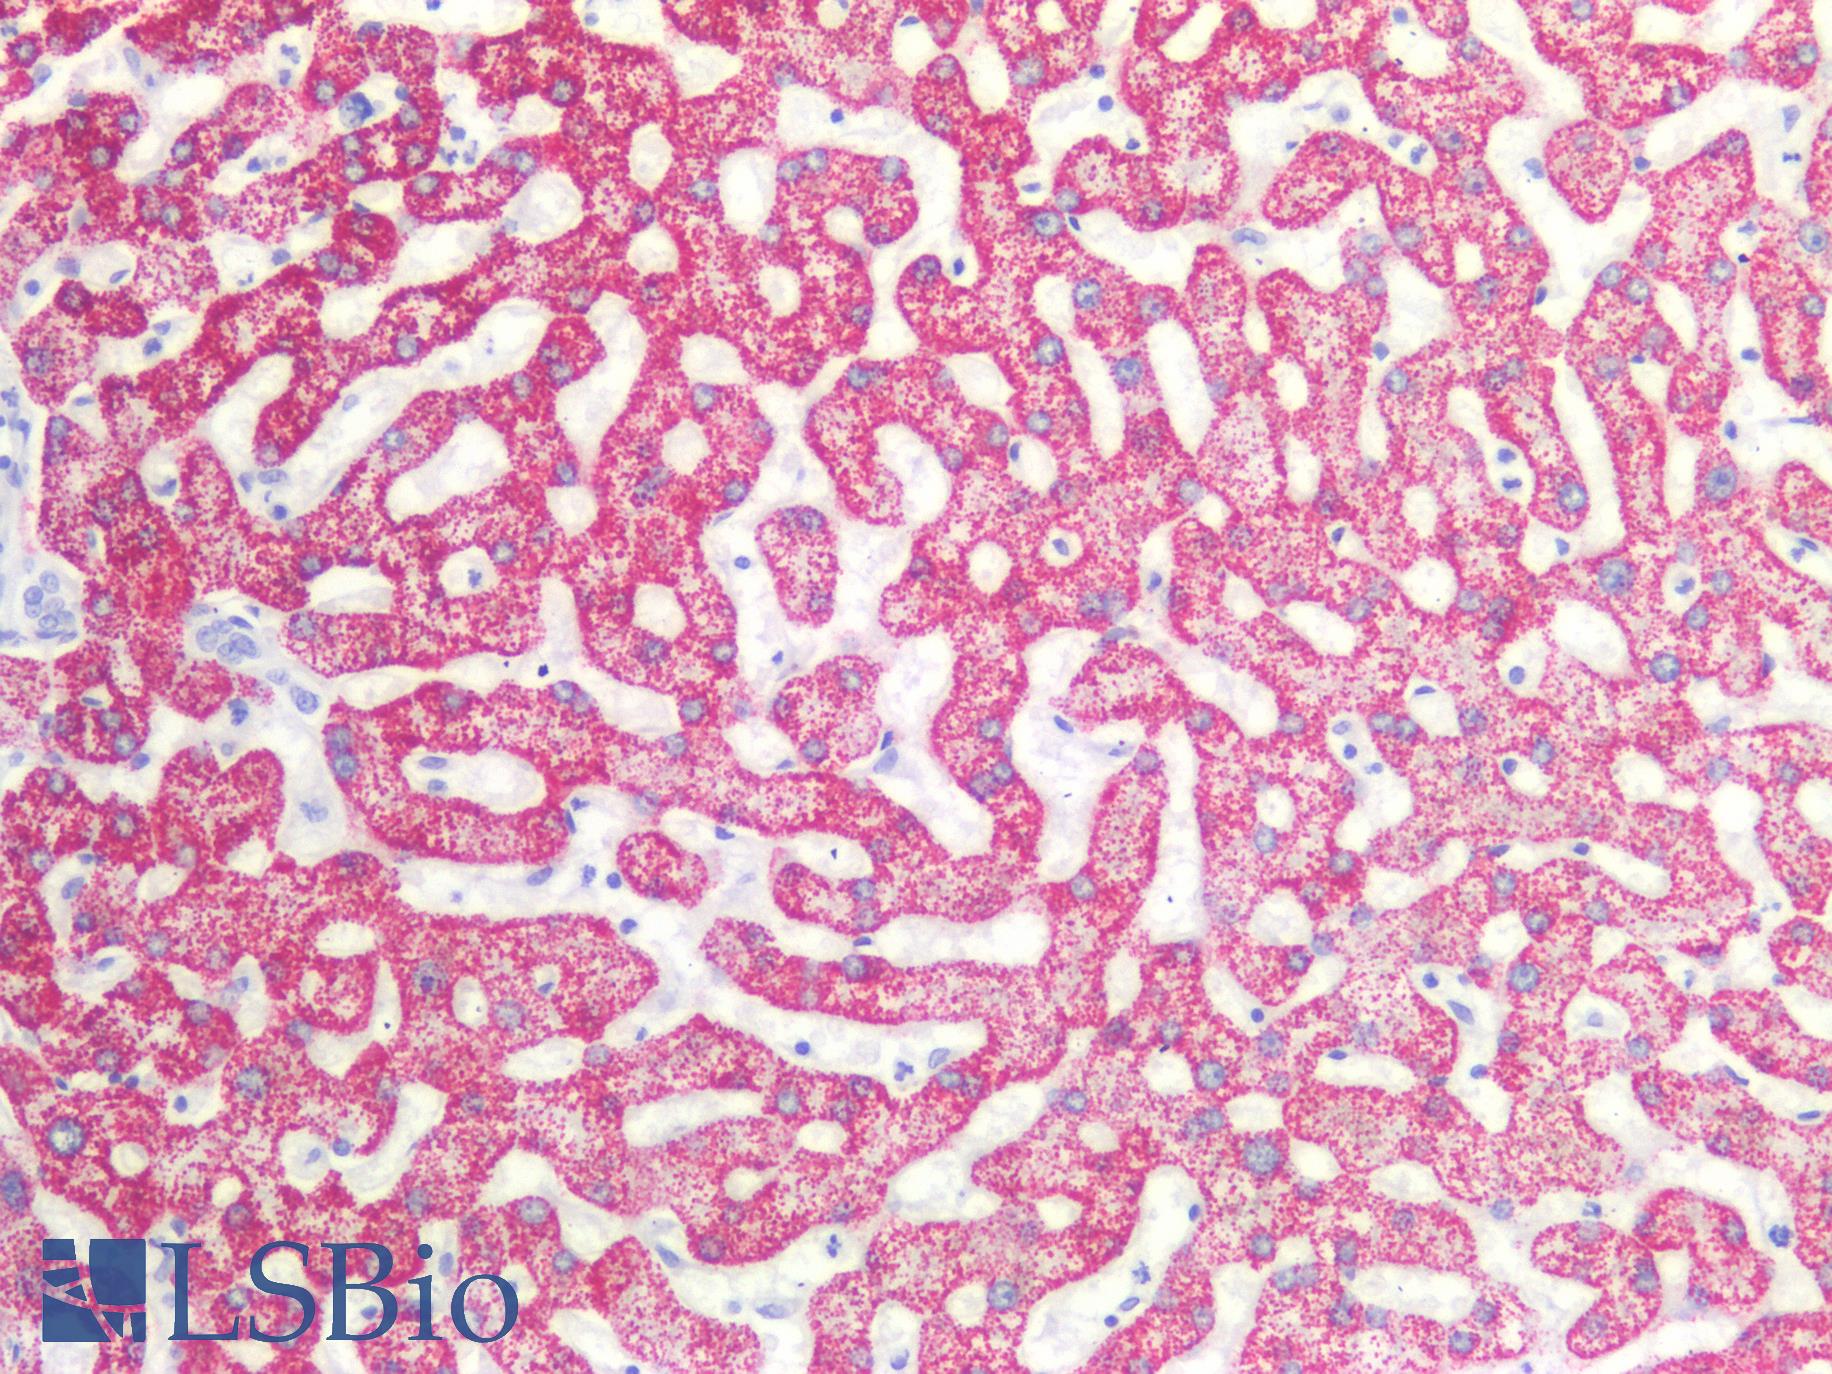 Hepatocyte Specific Antigen Antibody - Human Liver: Formalin-Fixed, Paraffin-Embedded (FFPE)